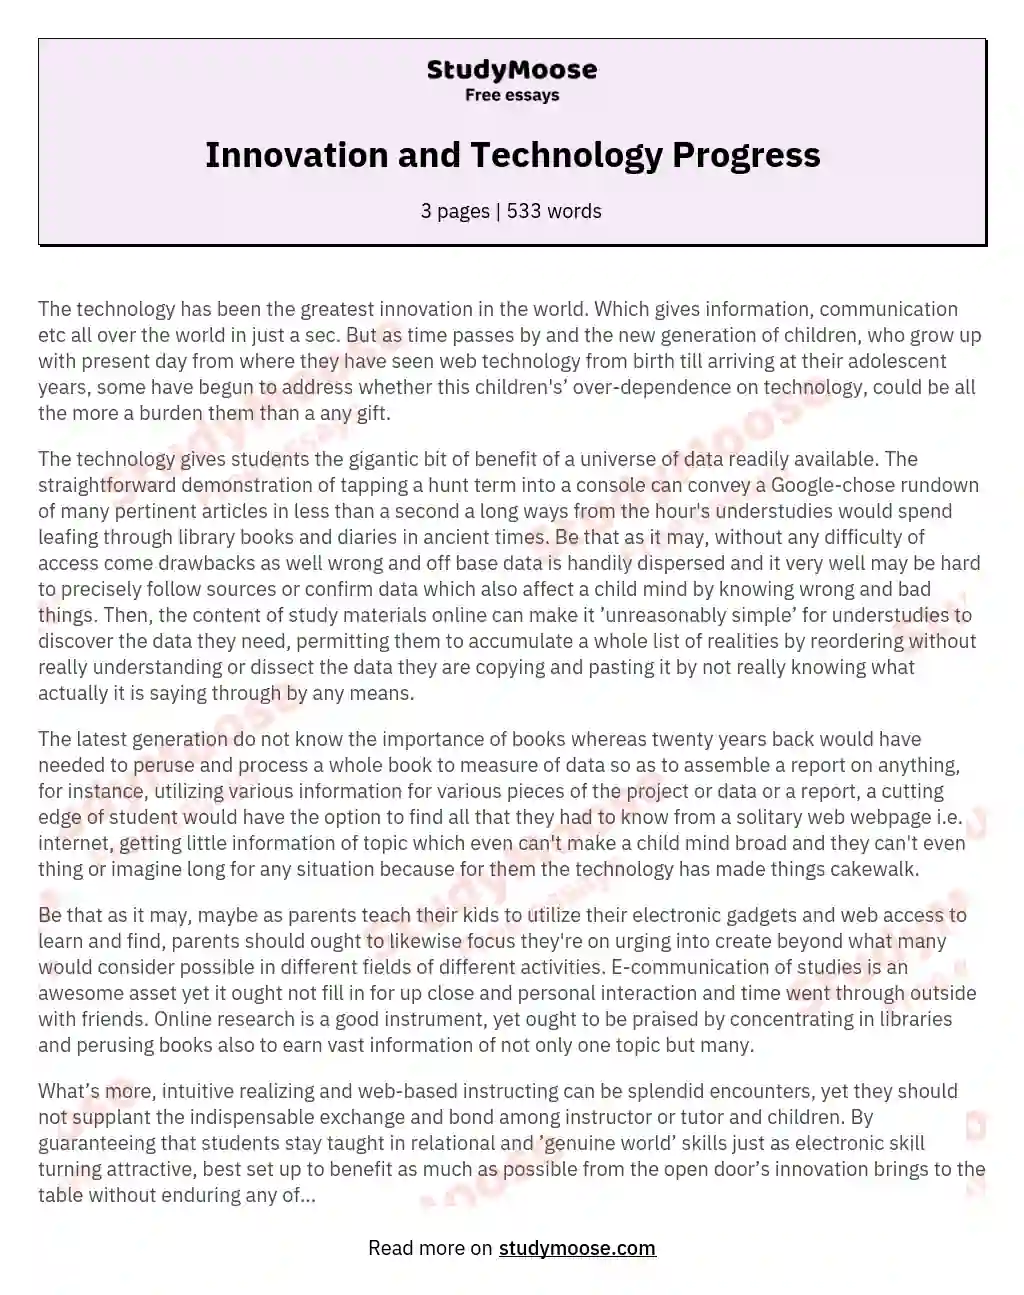 Innovation and Technology Progress essay